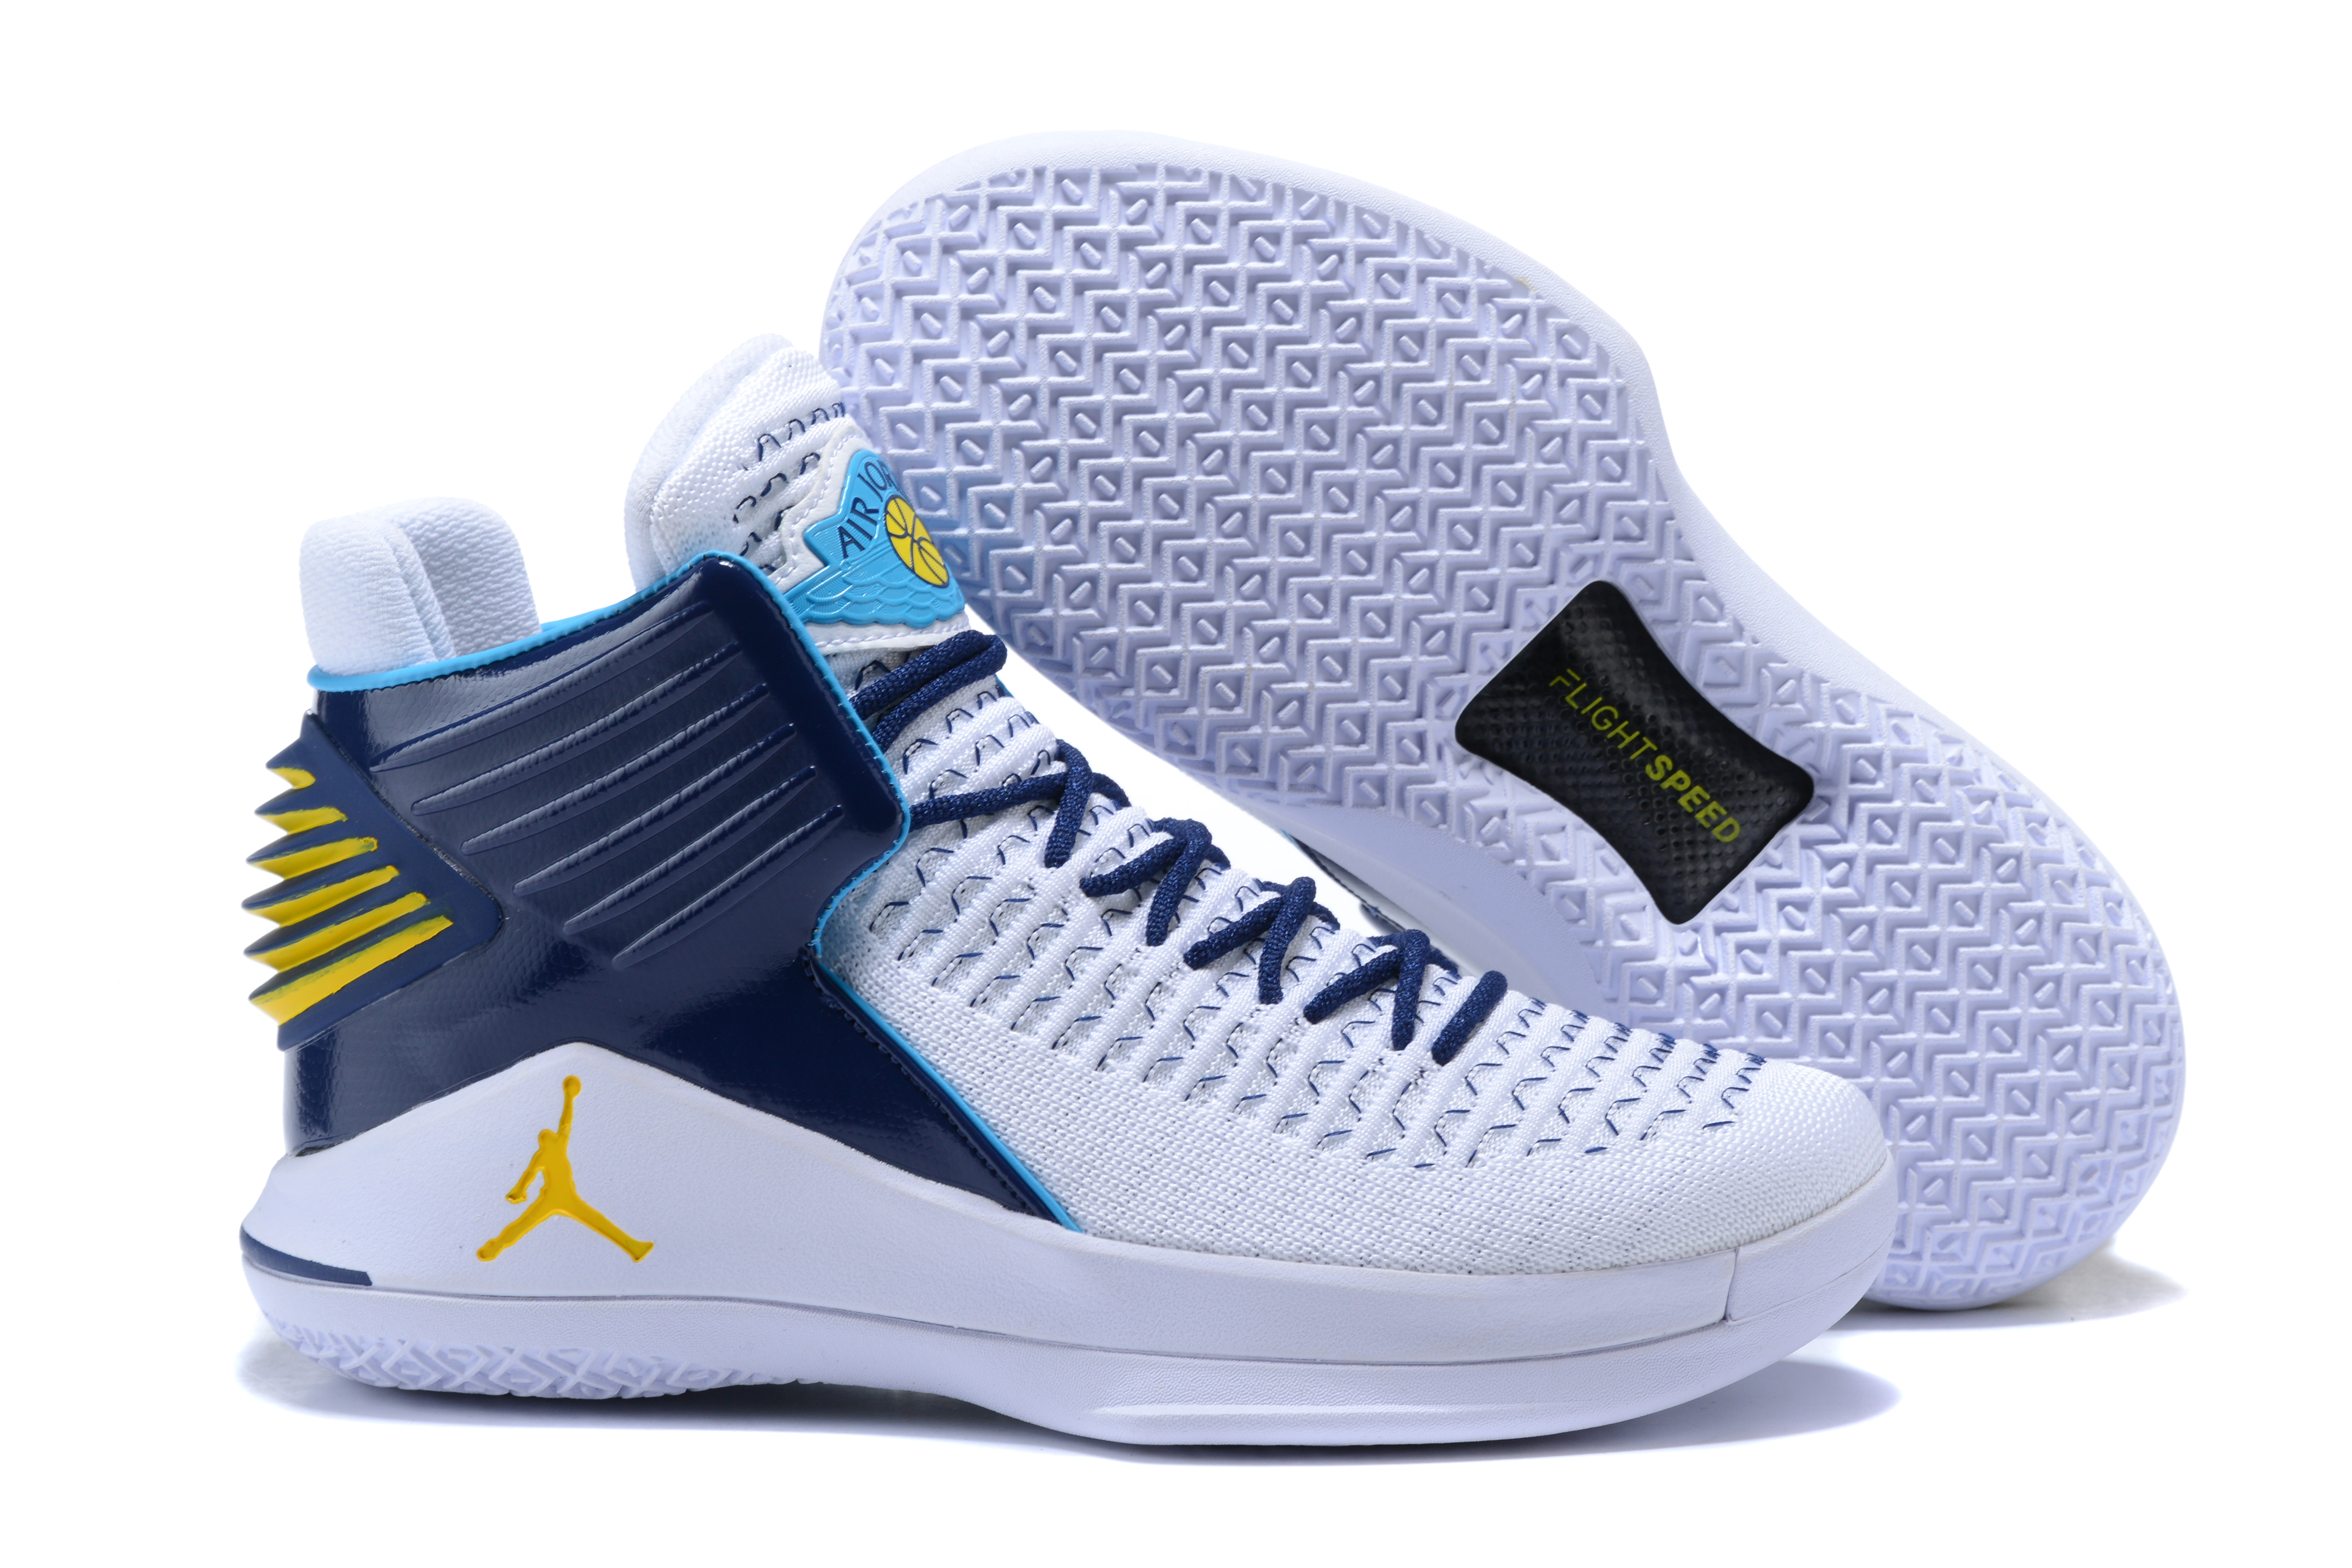 New Air Jordan 32 High White Blue Yellow